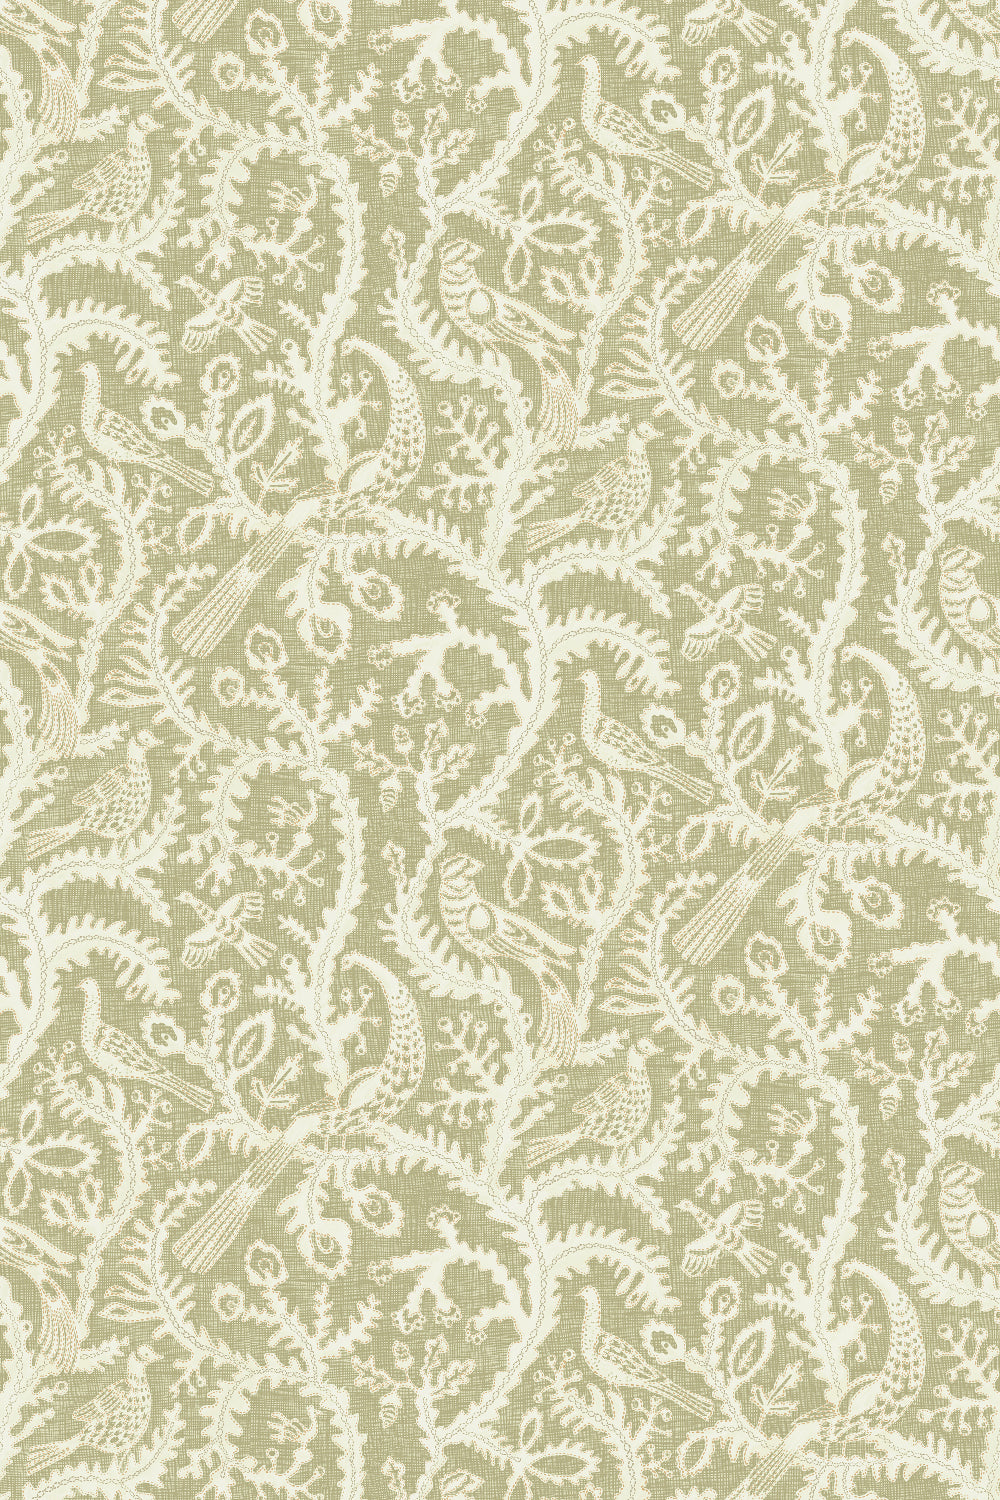 josephine-munsey-wallpaper-stitched-birds-folk-style-lace-effect-sage